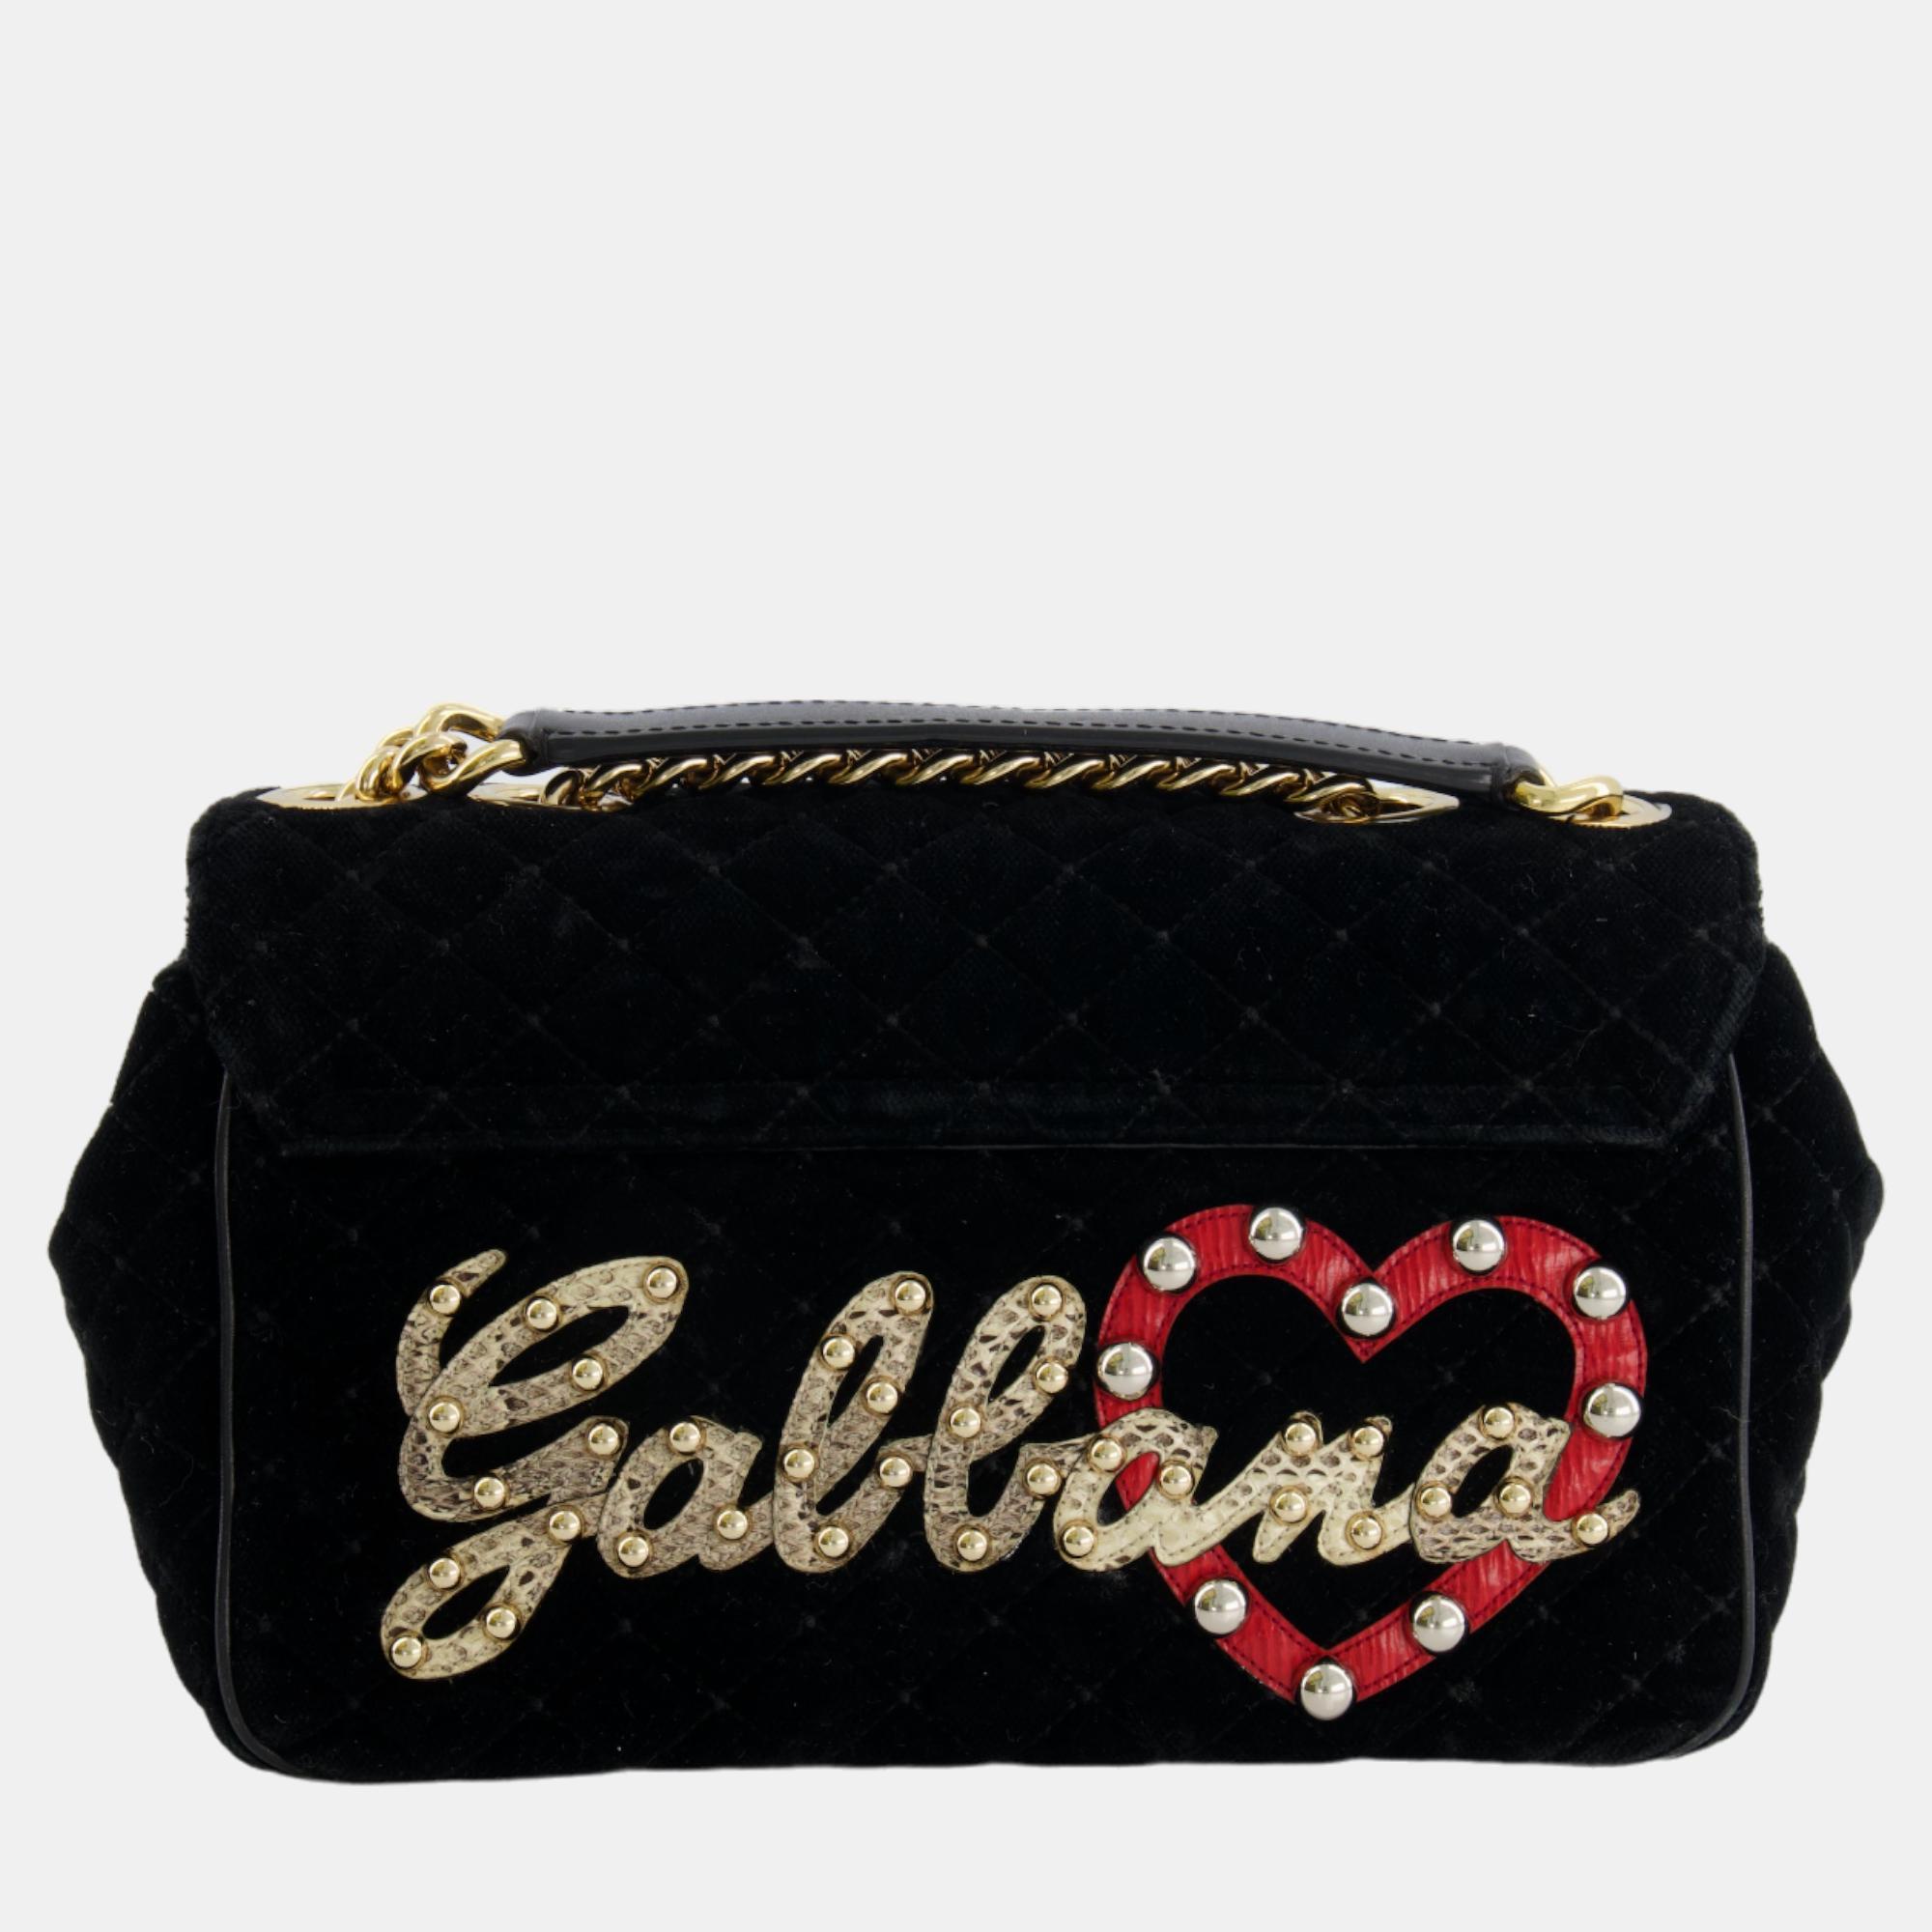 Dolce & Gabbana Black Velvet Lucia Bag With Embellishments And Gold Hardware